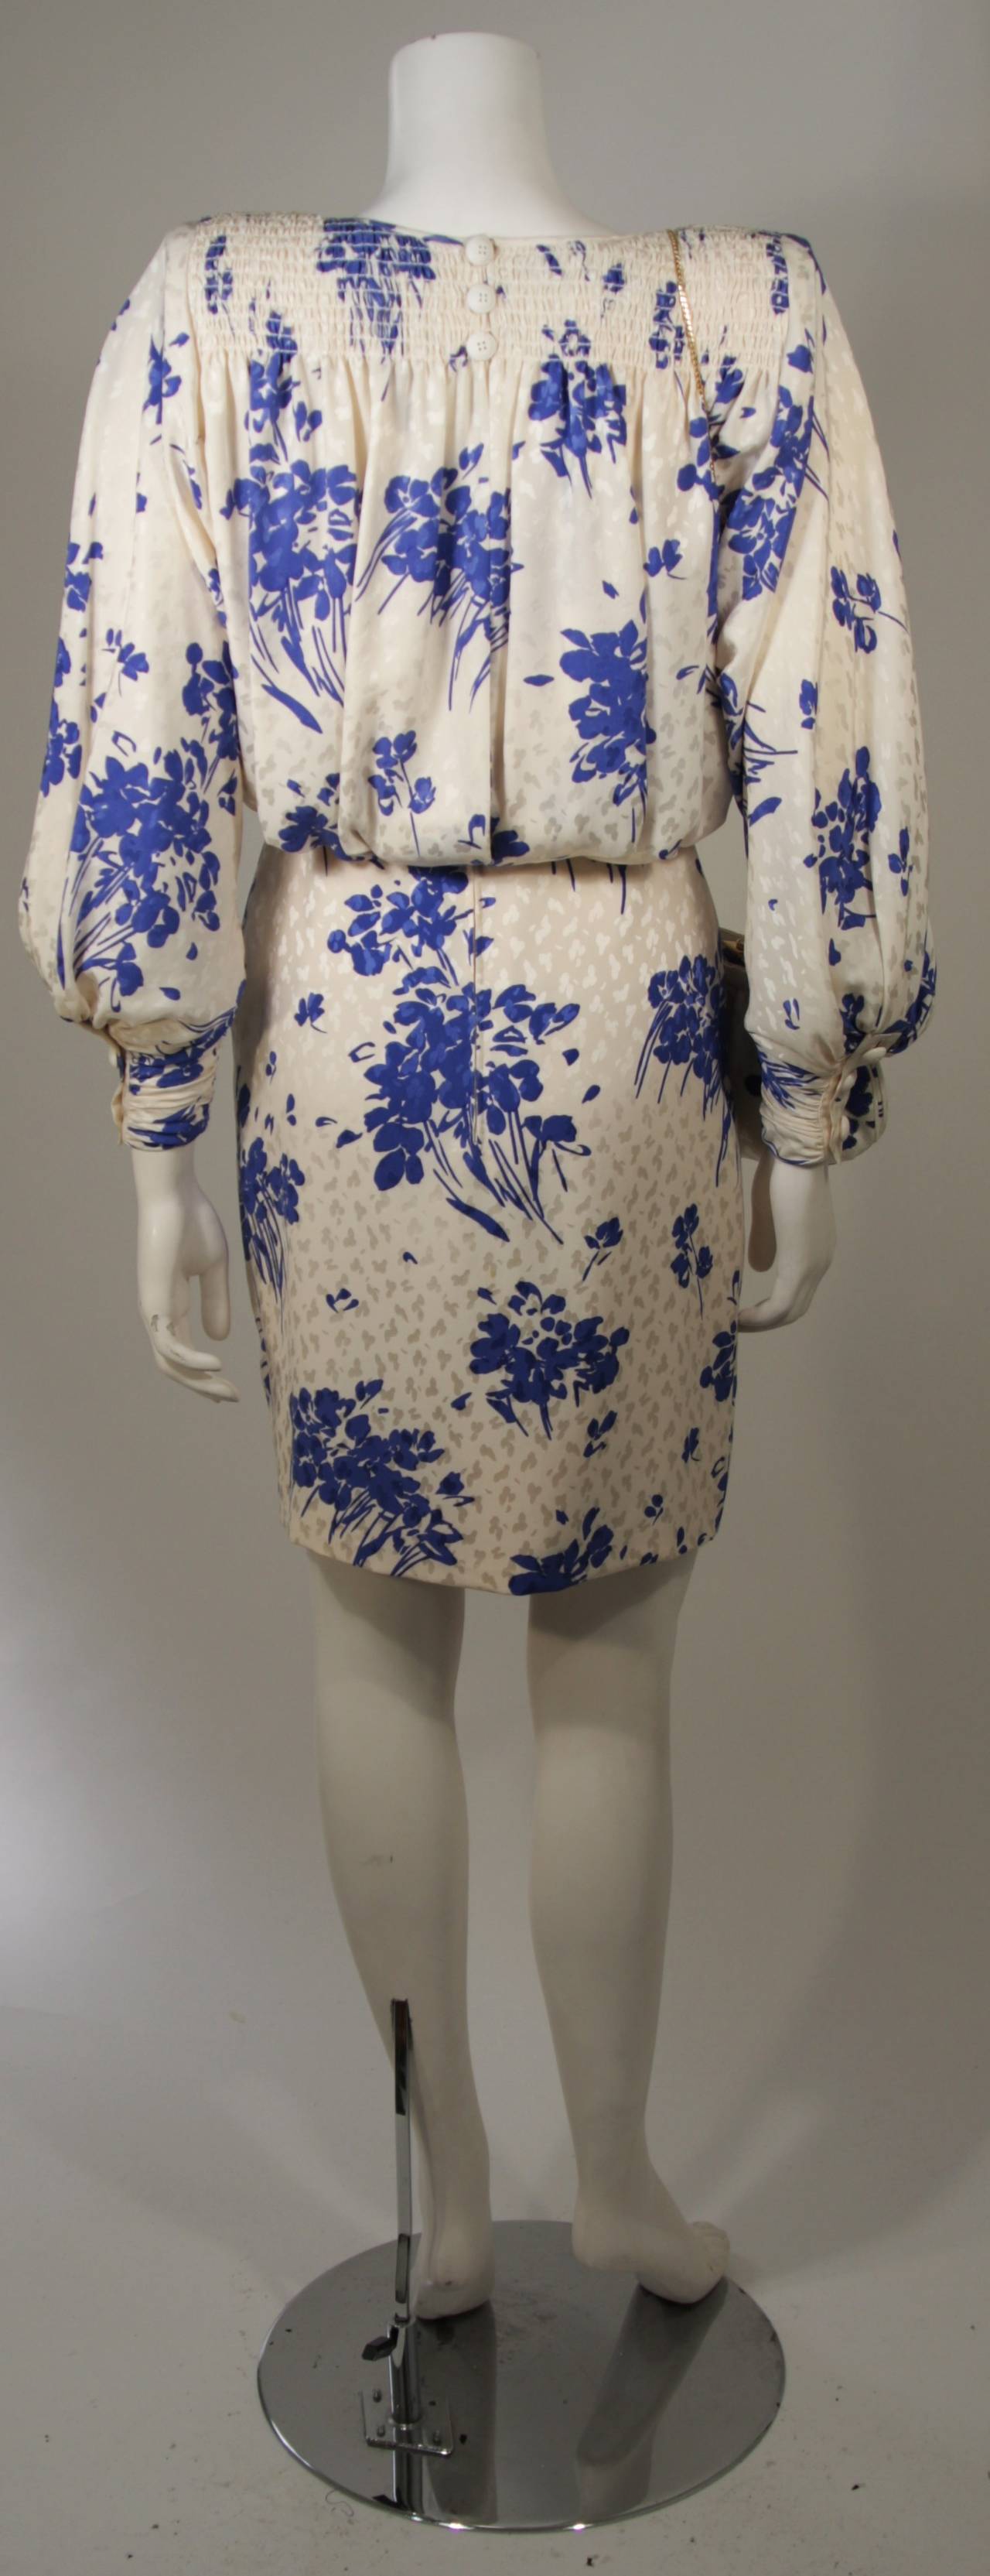 Galanos Silk Dress with Matching Embellished Judith Leiber Purse Size 2-4 4